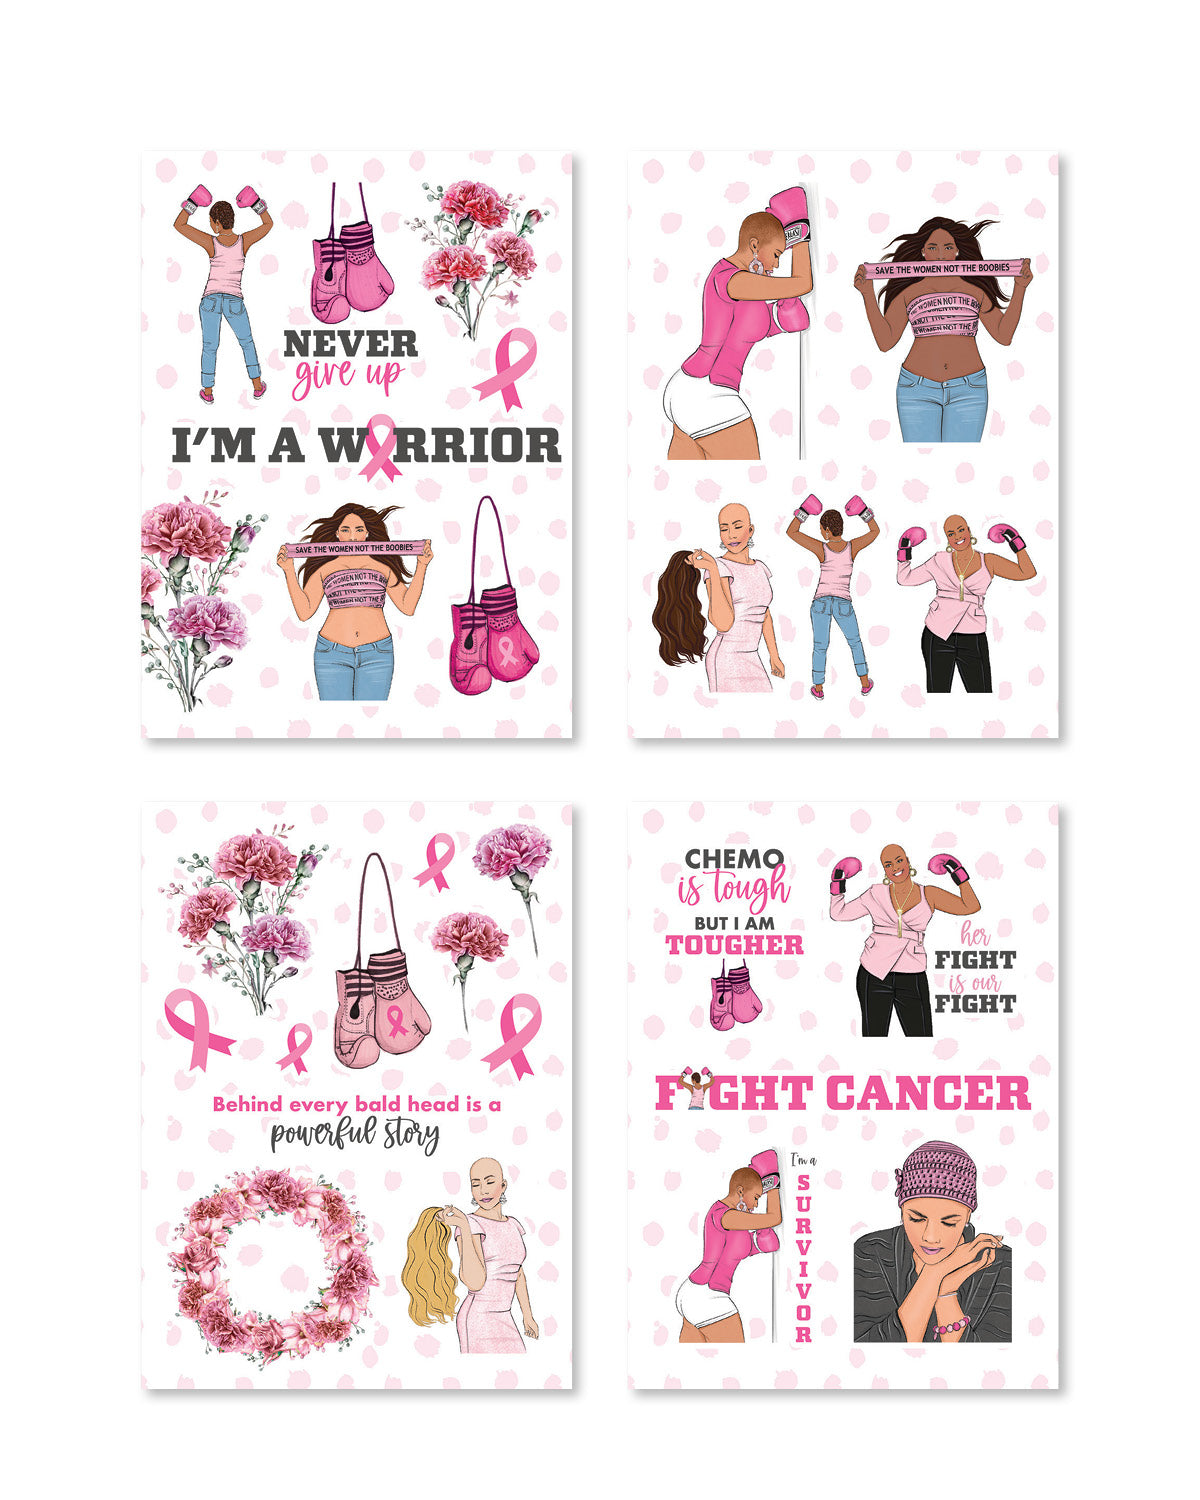 Breast Cancer Sticker Pack [DIGITAL DOWNLOAD]